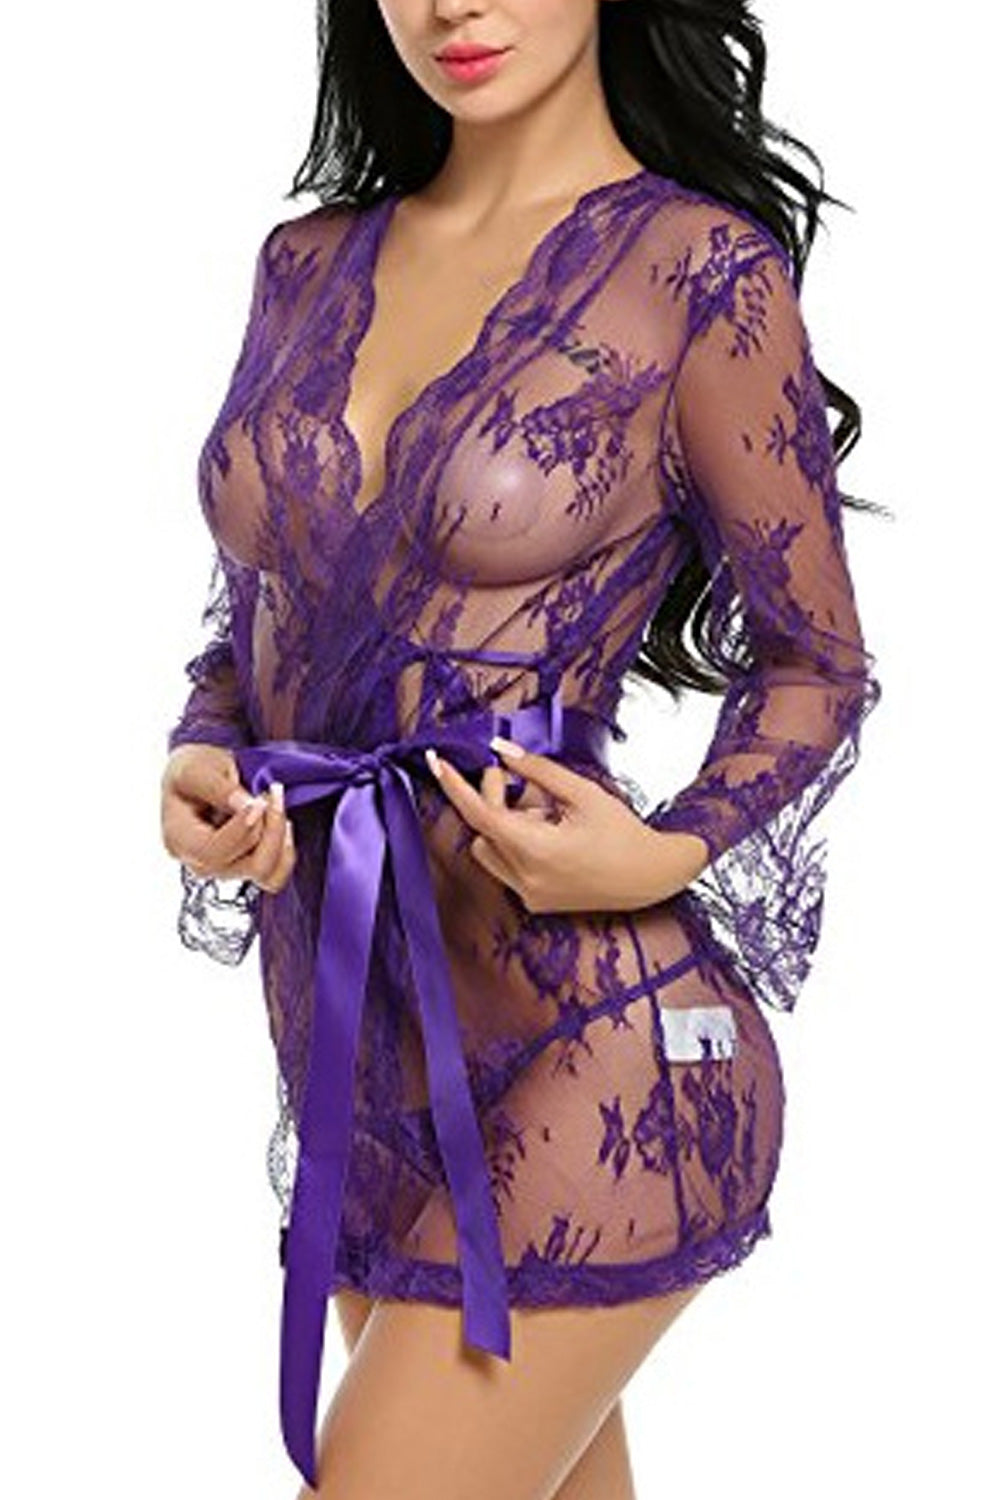 Ketty More Women Silk Ribbon Sheered Flower Lace Lingerie-KMWL115